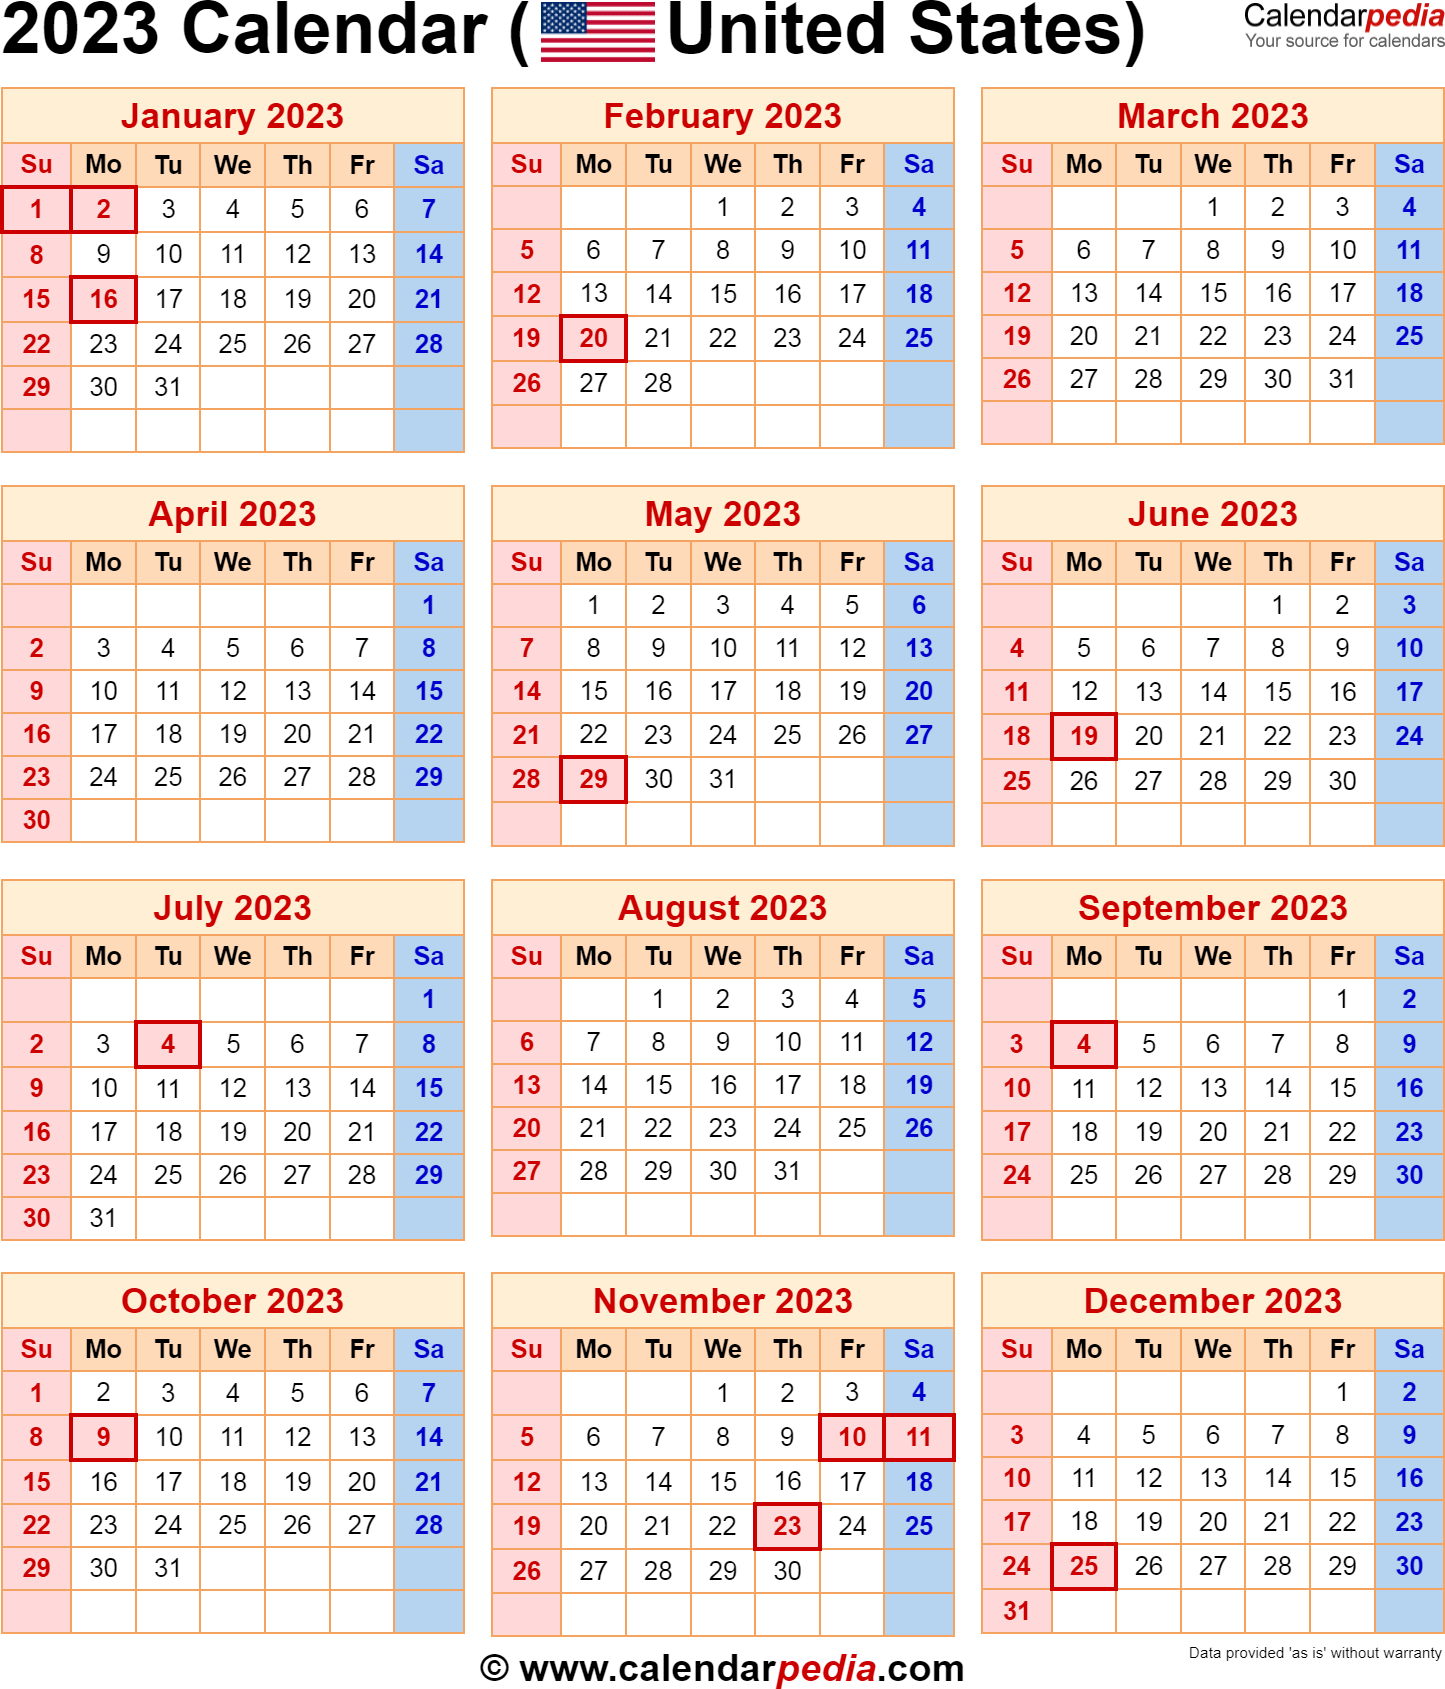 2023-united-states-calendar-with-holidays-calendar2023